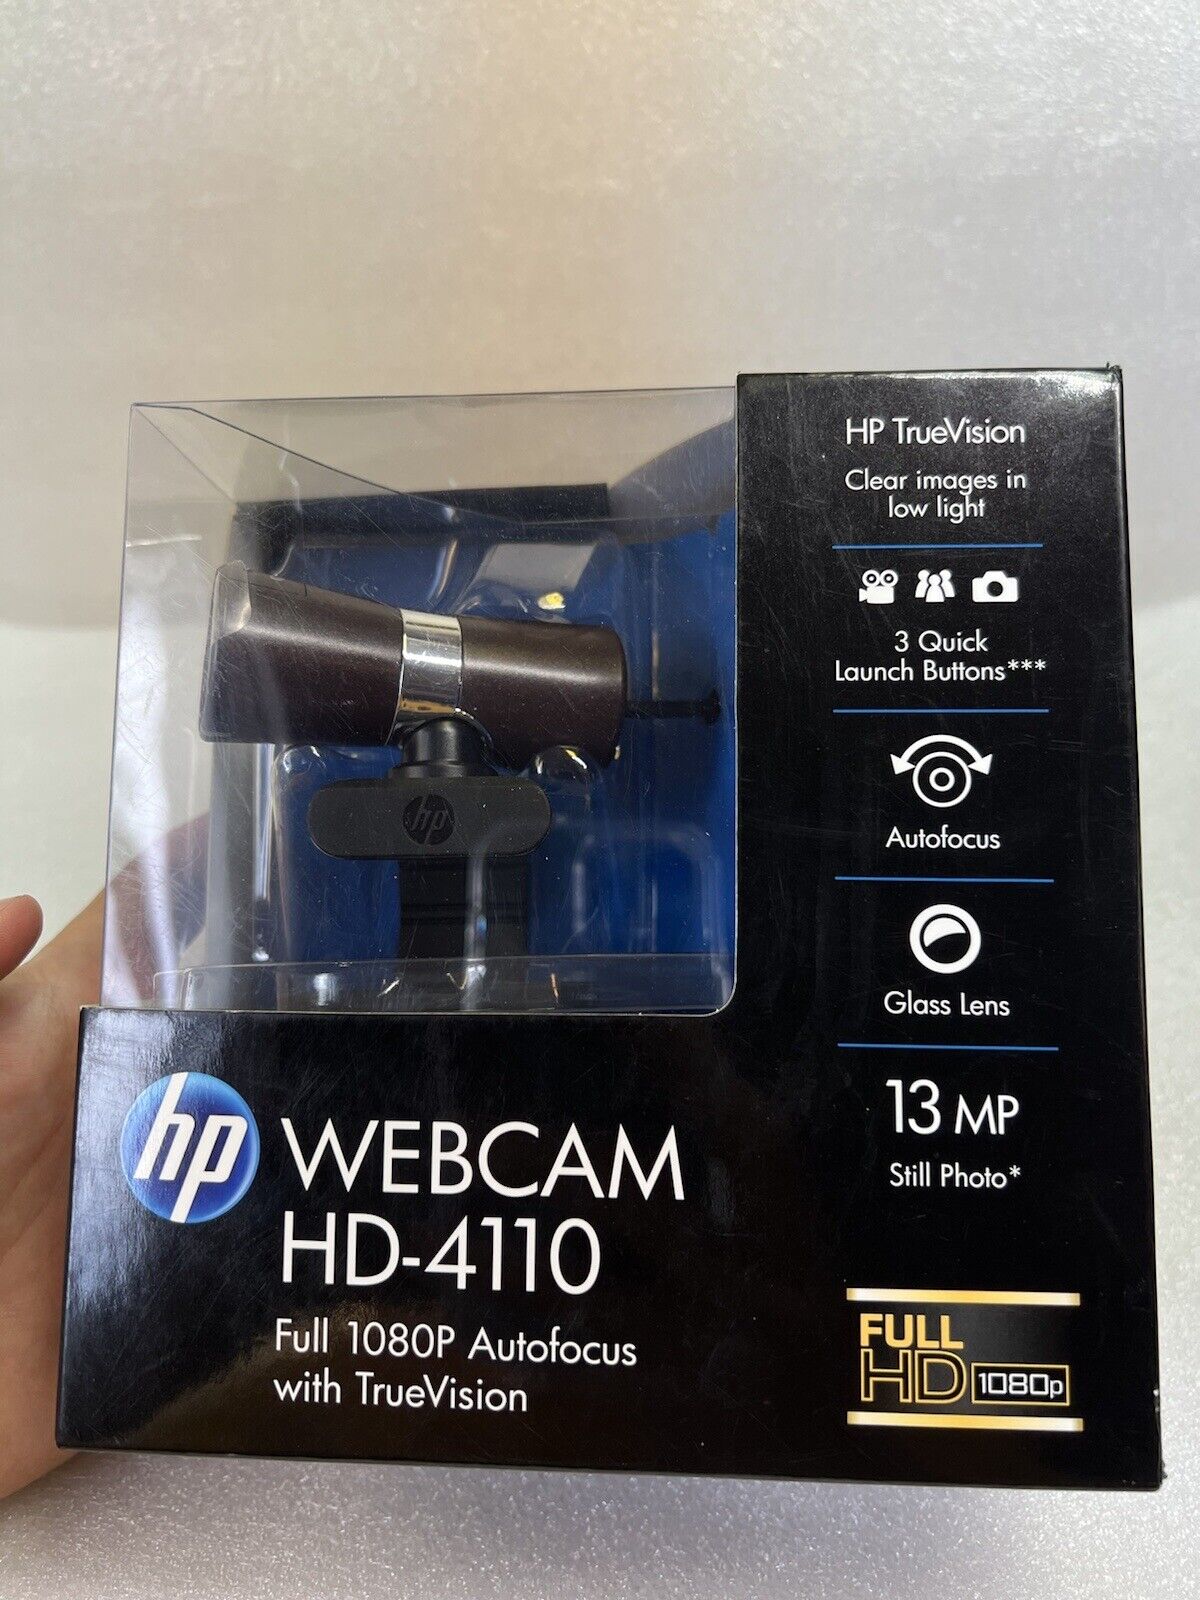 *BRAND NEW & SEALED* HP Webcam HD-4110, Full 1080P Autofocus with TrueVision